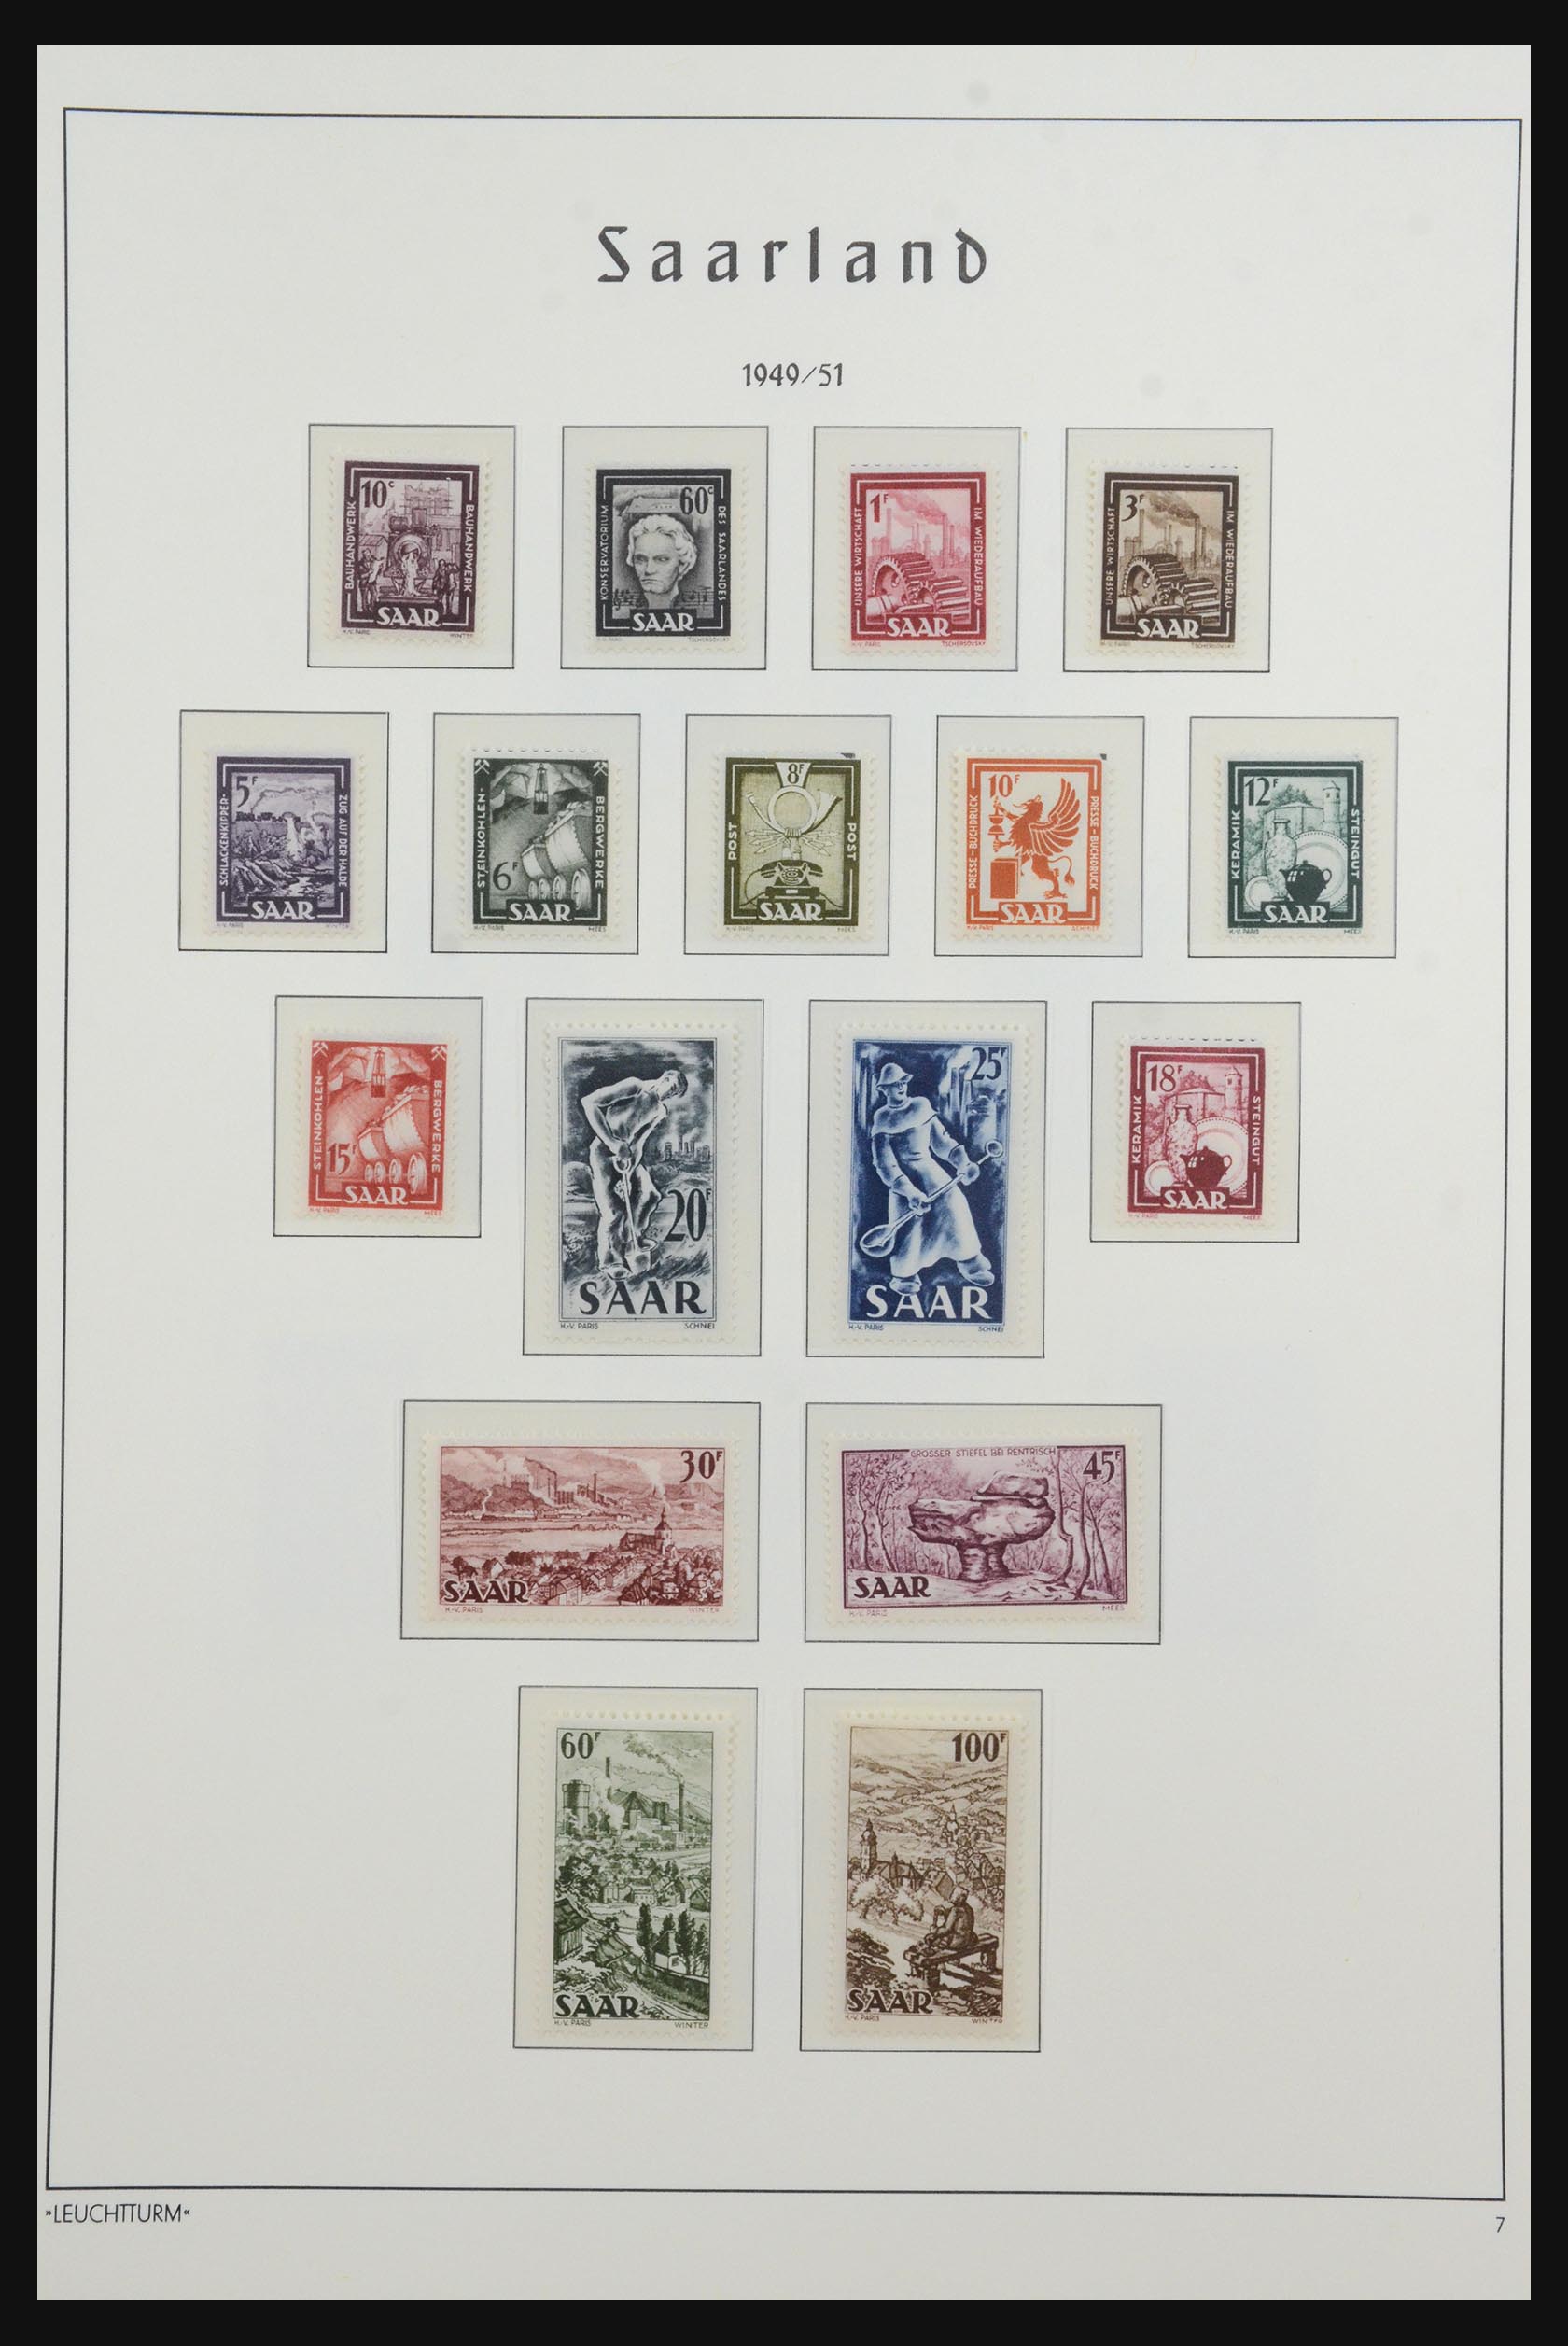 31601 093 - 31601 Bundespost, Berlin and Saar 1948-2008.